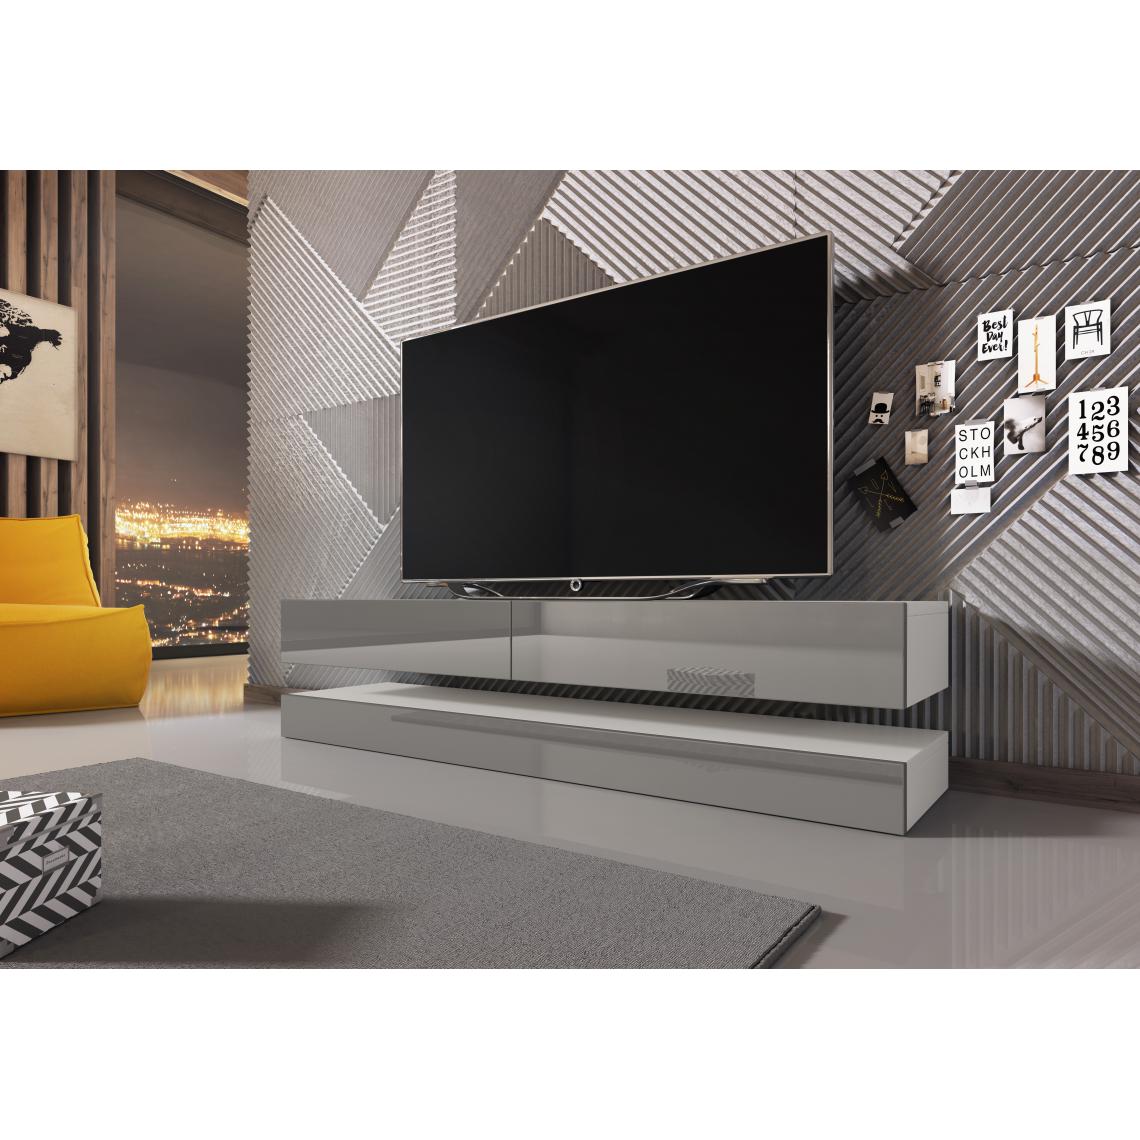 3xeliving - Table TV innovante et moderne Sajna 140cm blanc / gris brillant - Meubles TV, Hi-Fi